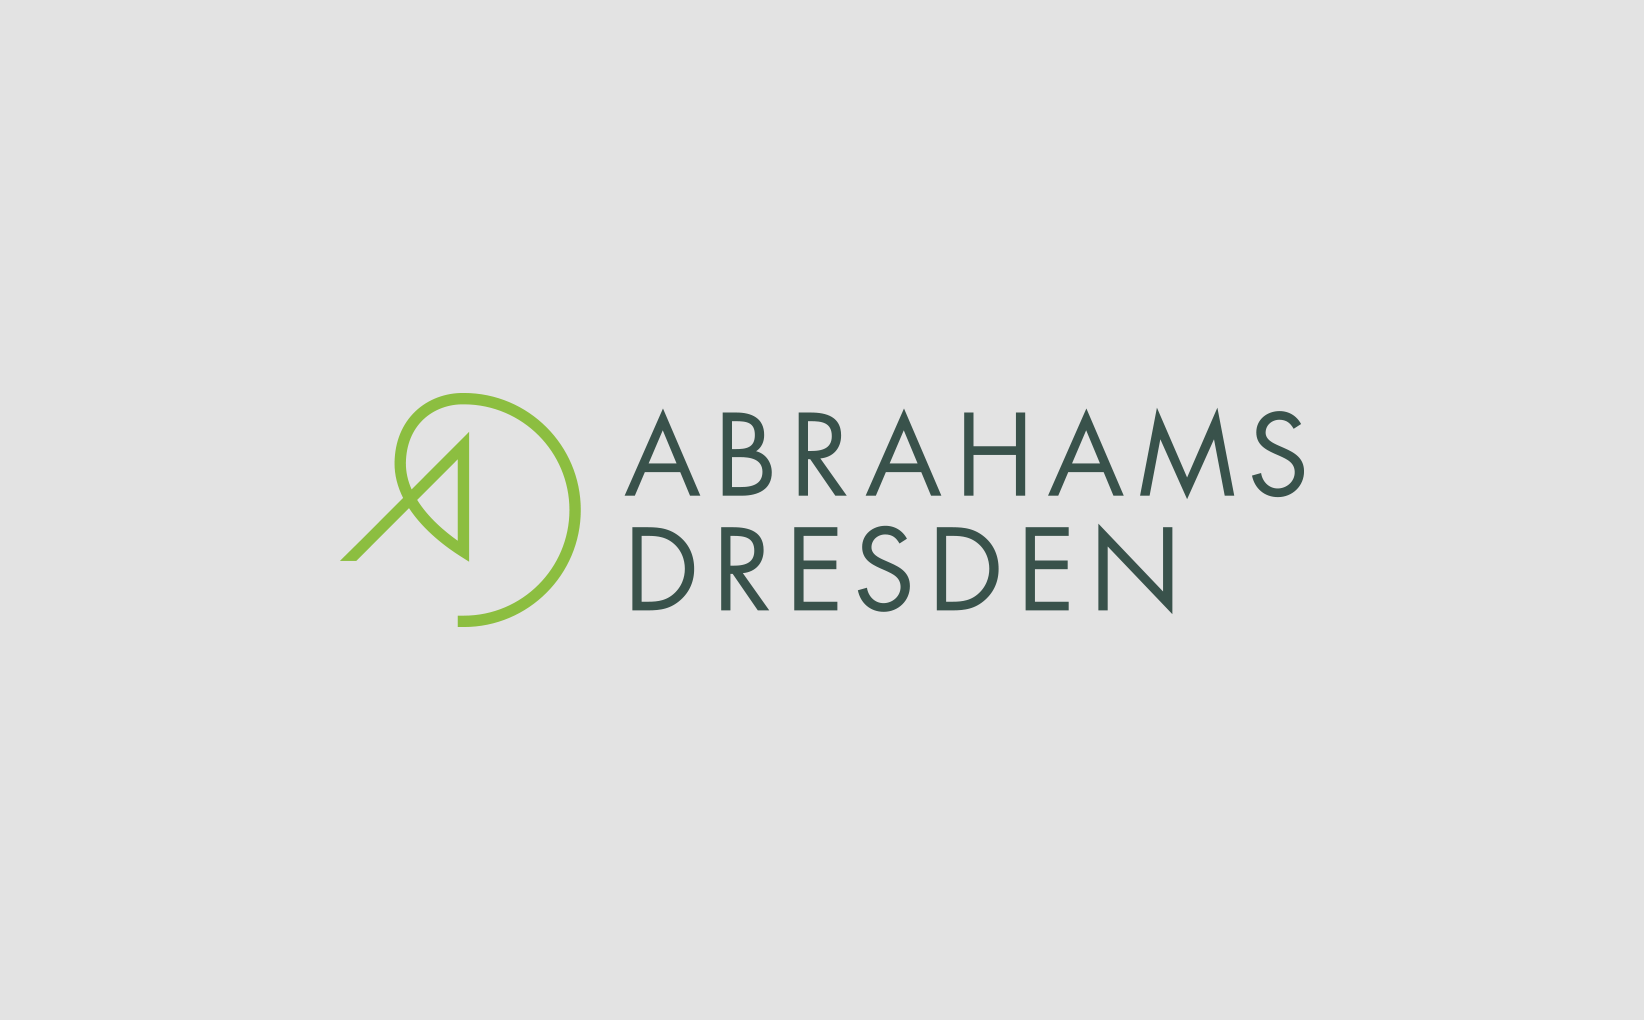 Abrahams Dresden